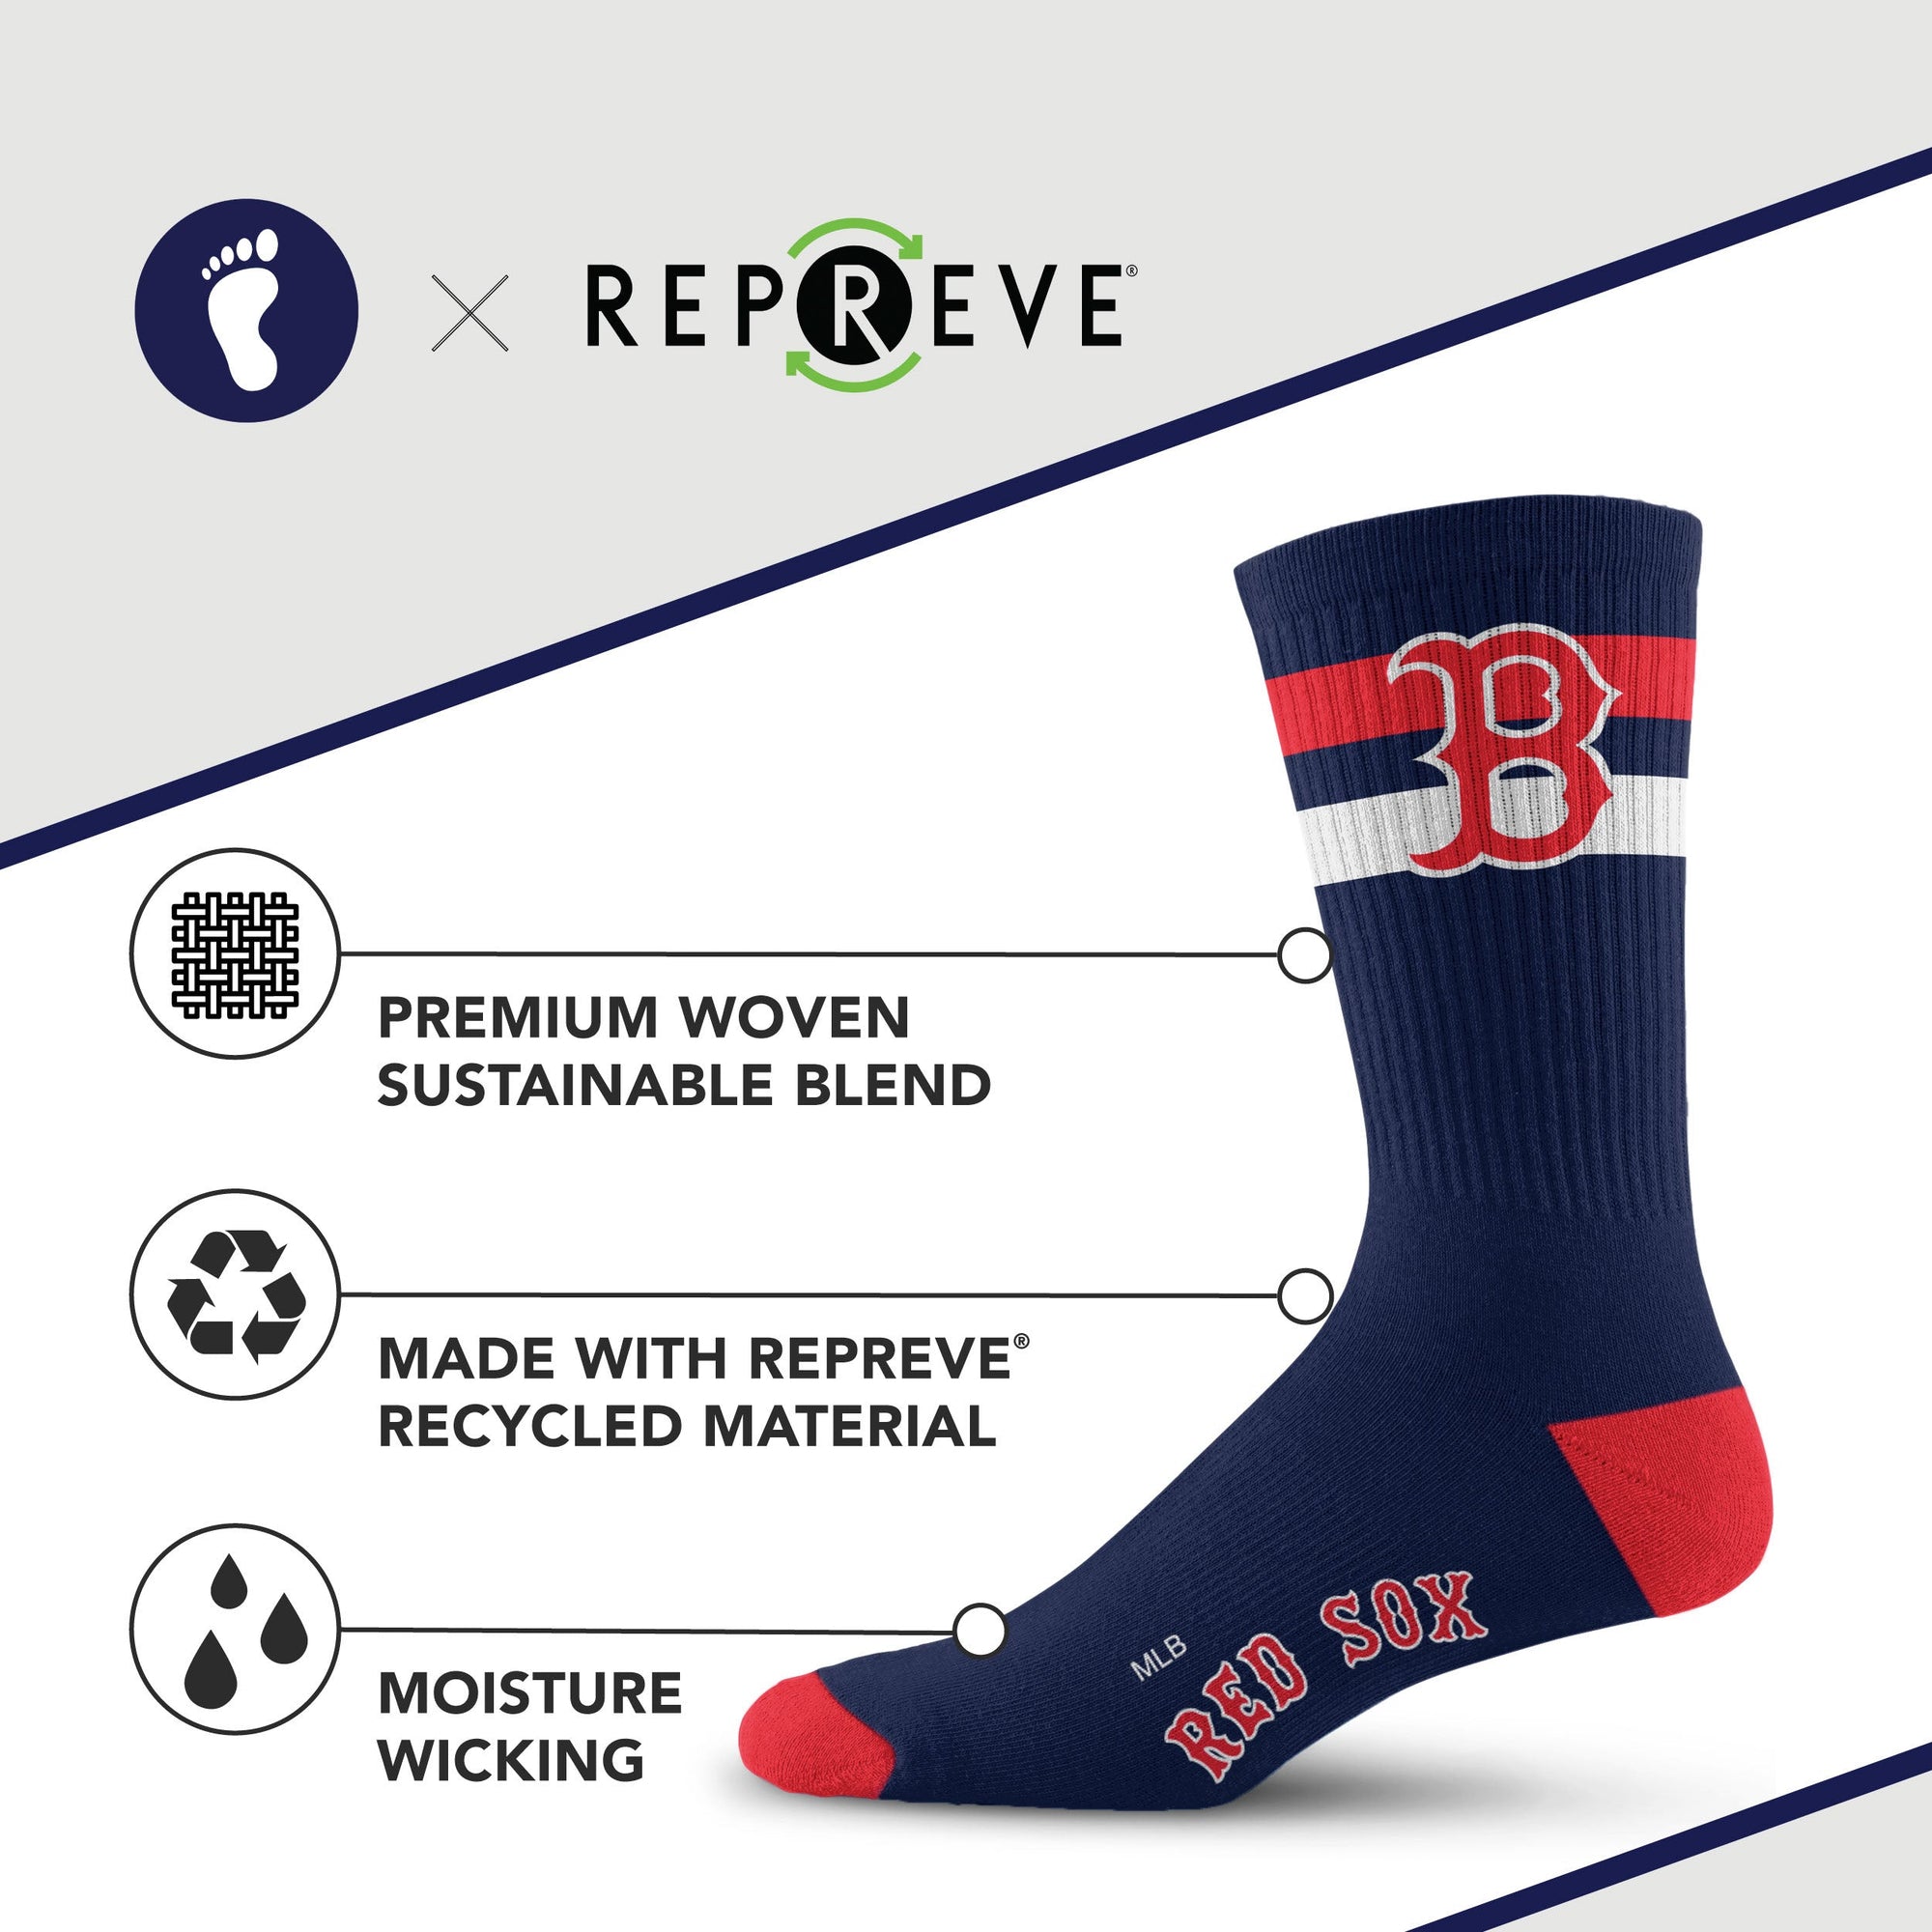 Boston Red Sox Legend Premium Crew Socks